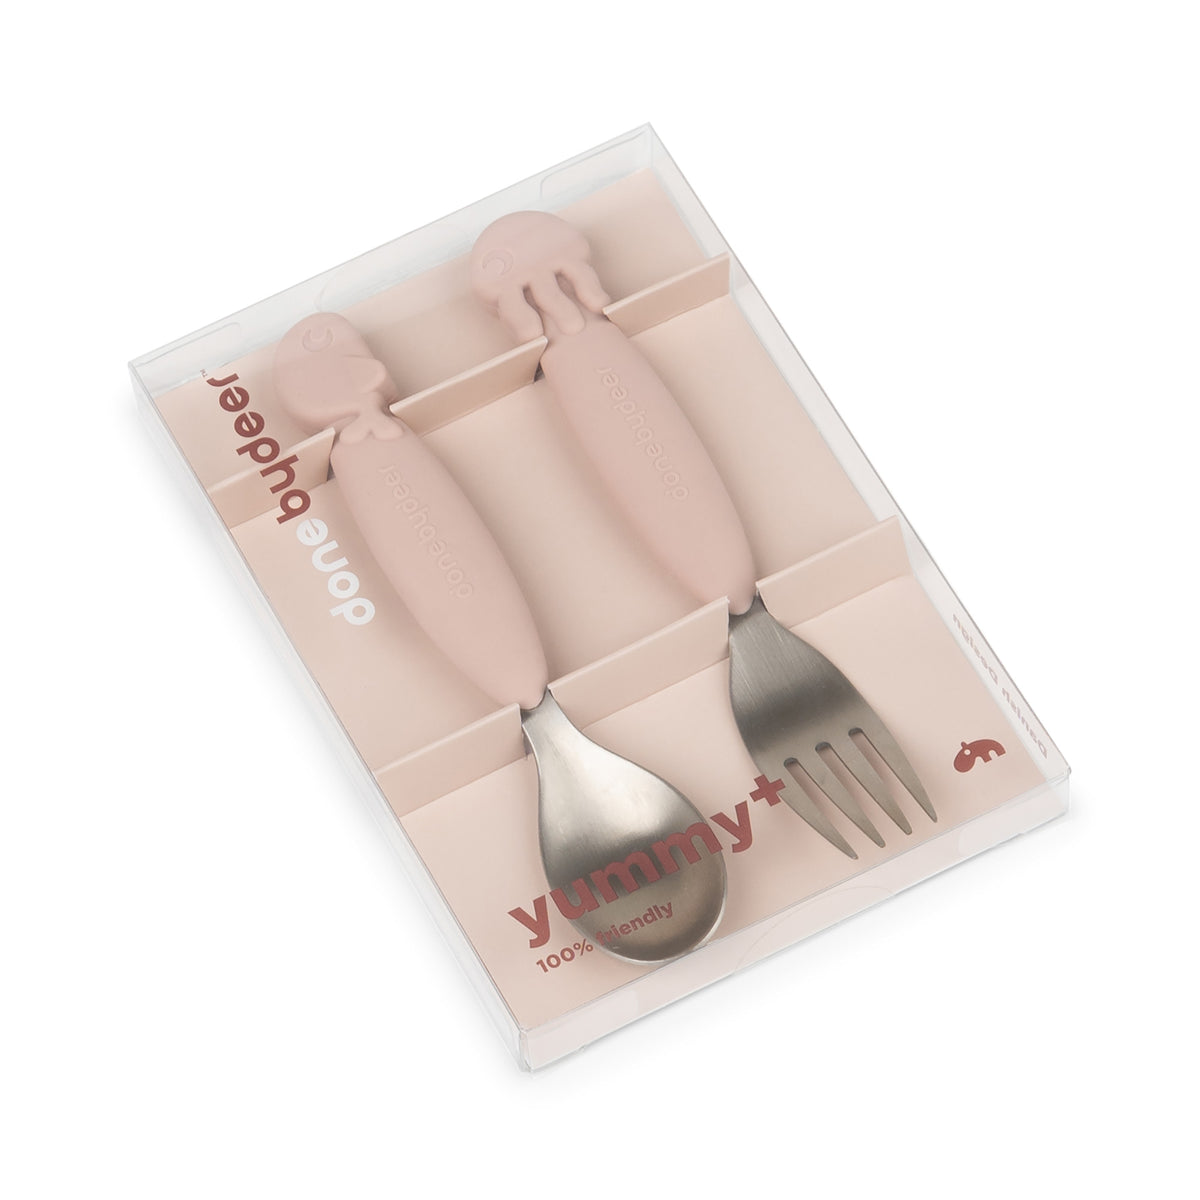 YummyPlus spoon & fork set - Sea friends - Powder - Packaging